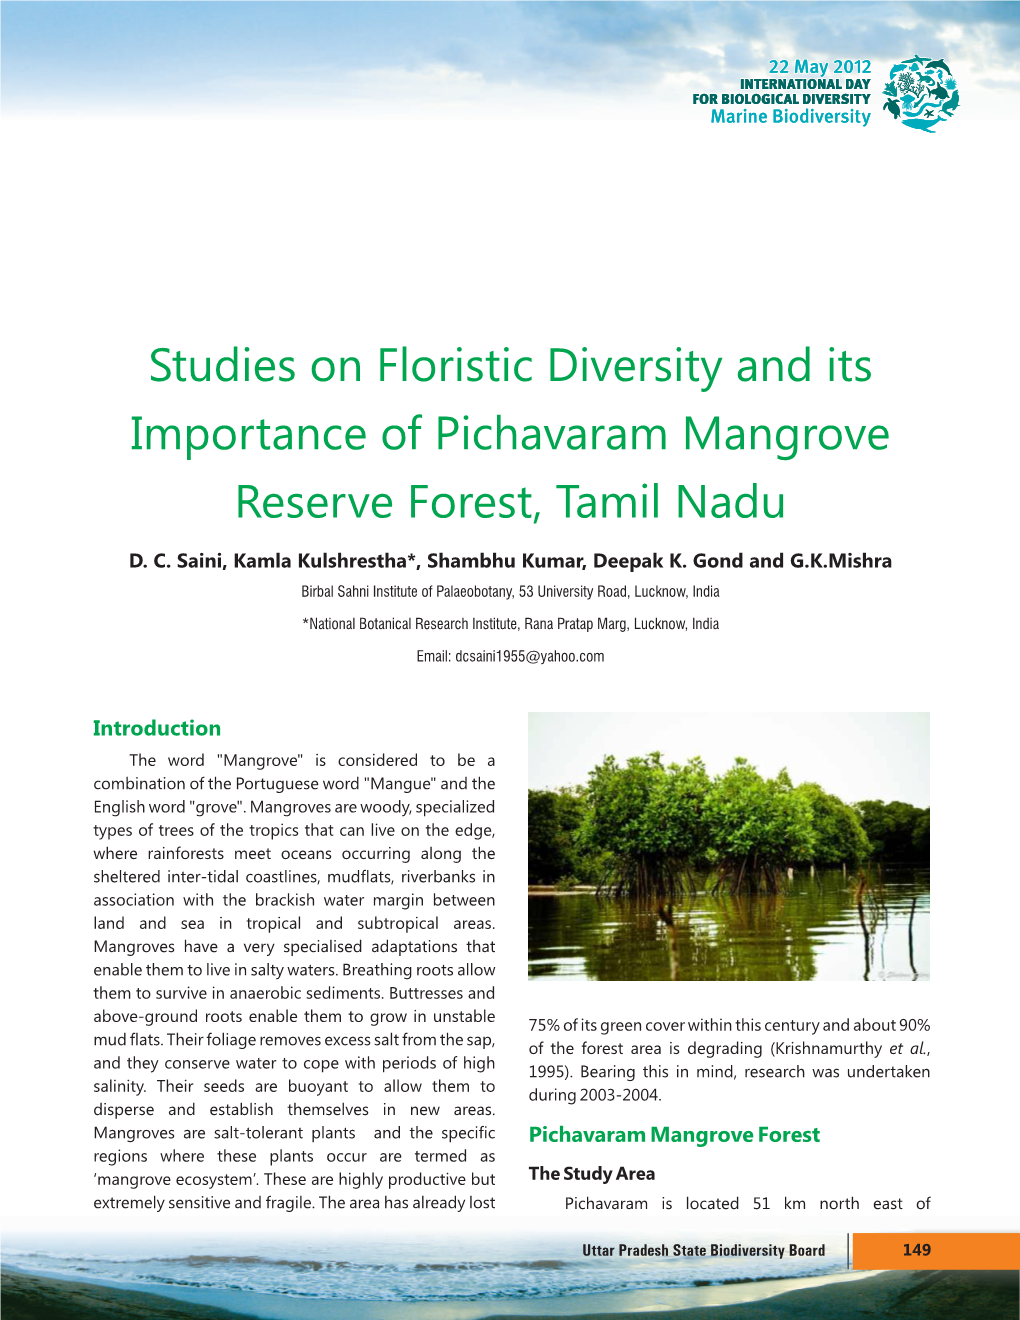 Studies on Floristic Diversity and Its Importance of Pichavaram Mangrove Reserve Forest, Tamil Nadu